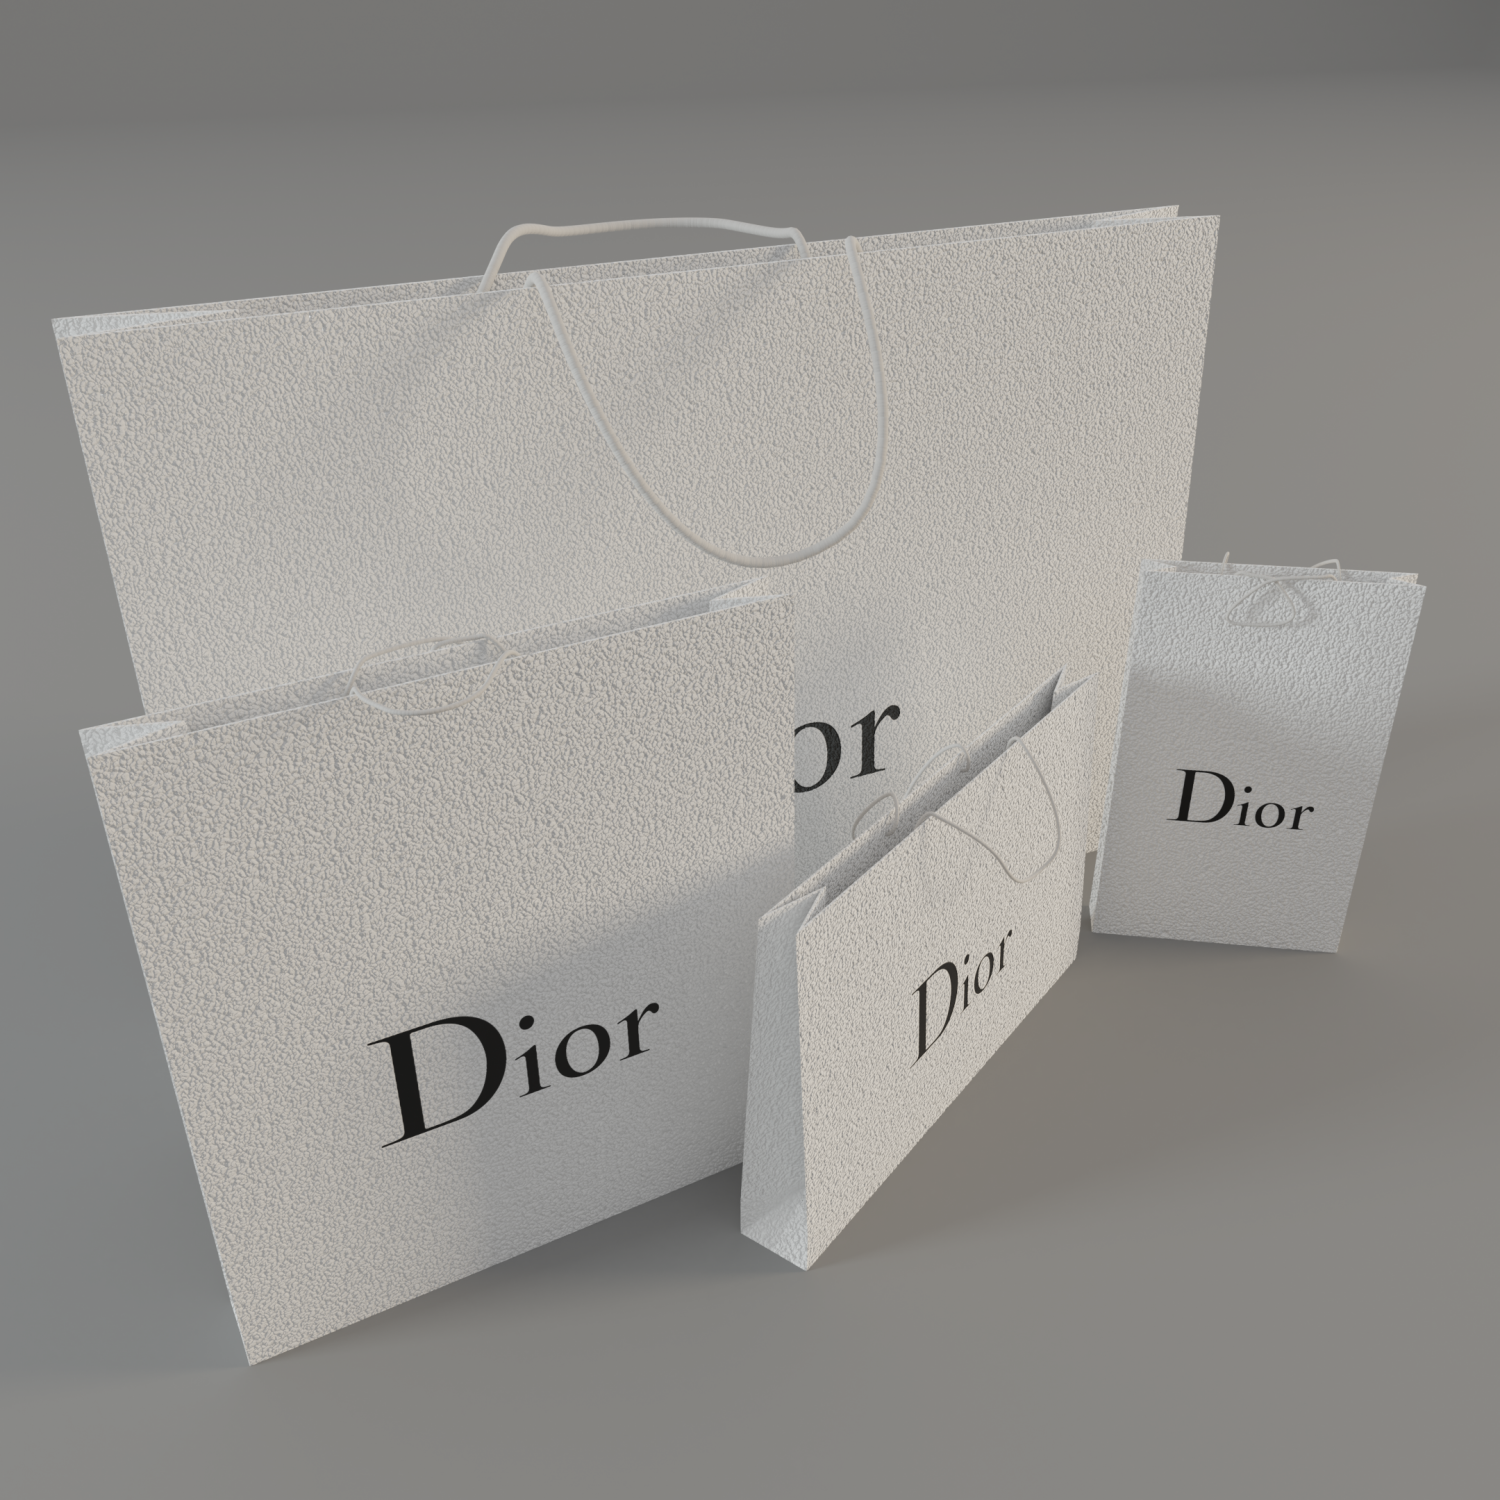 Where can I buy cheap Dior handbags  Quora